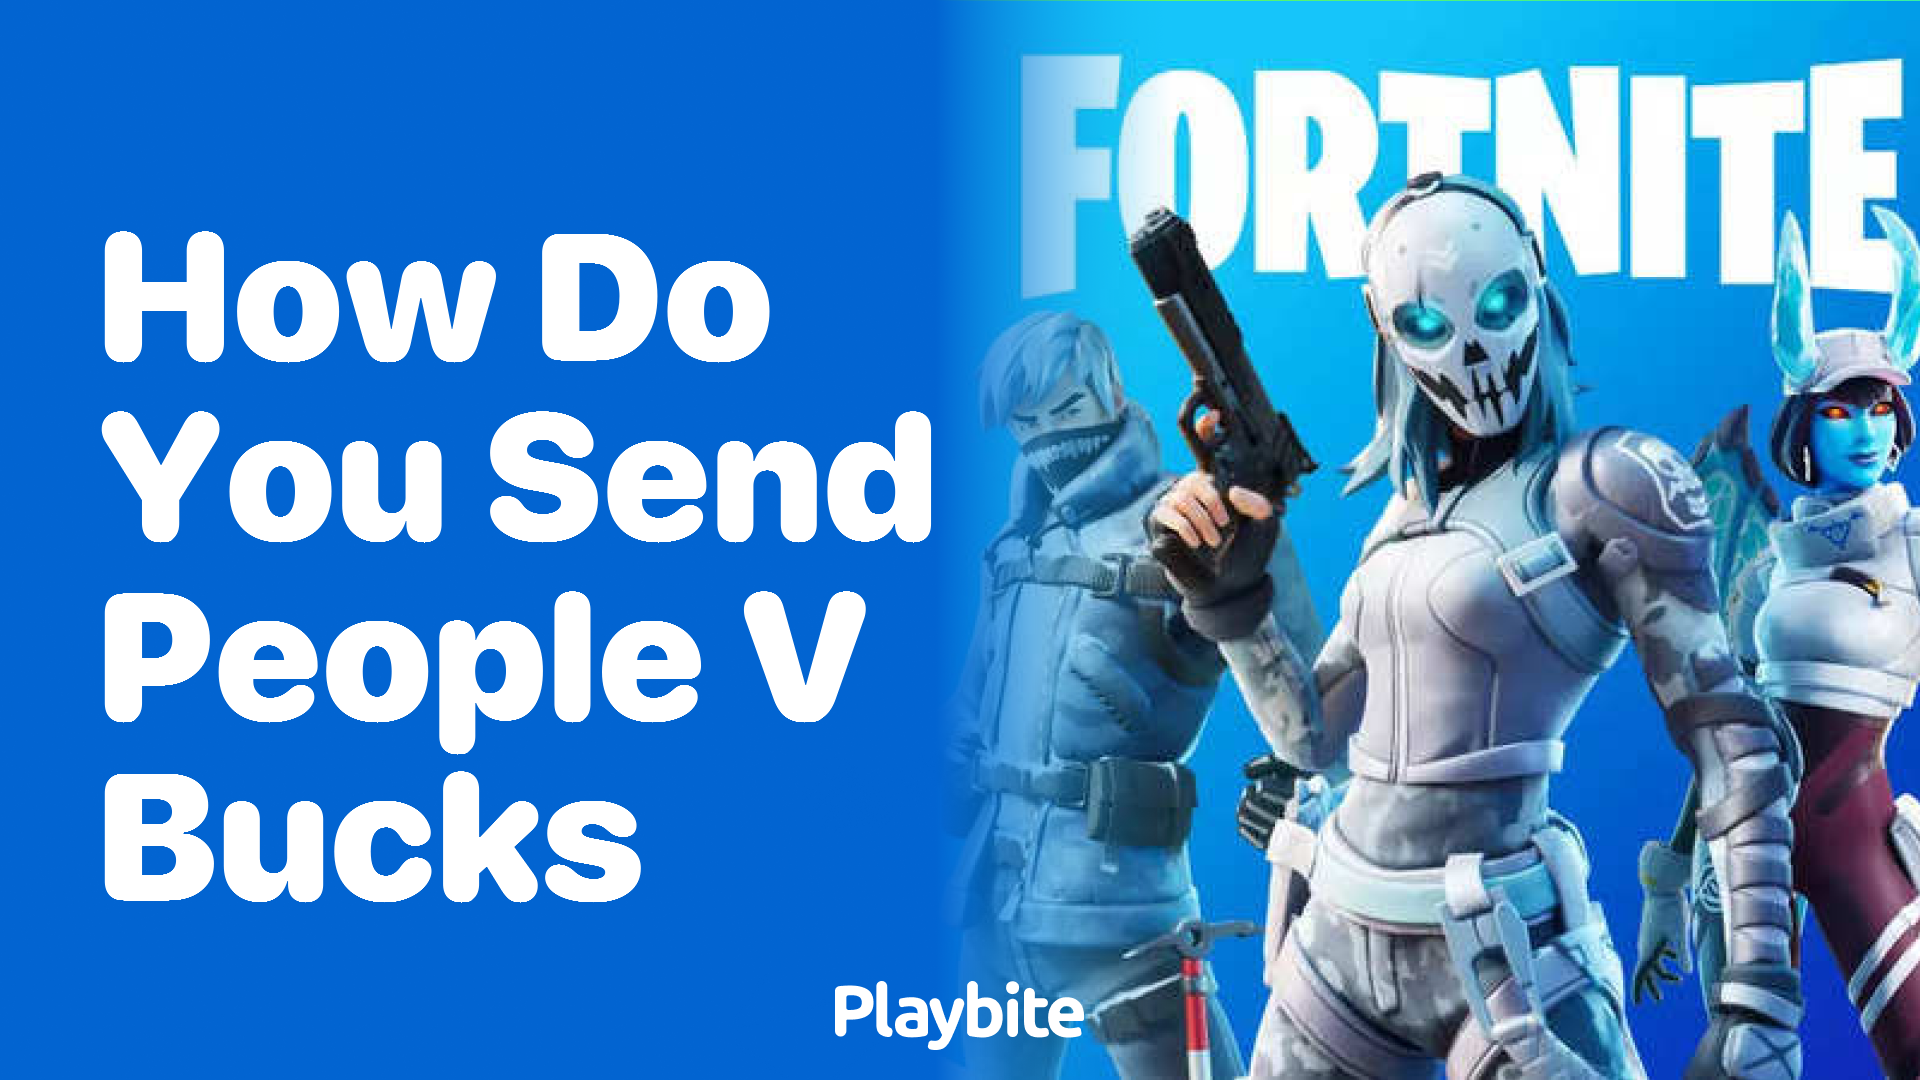 How Do You Send People V-Bucks in Fortnite?